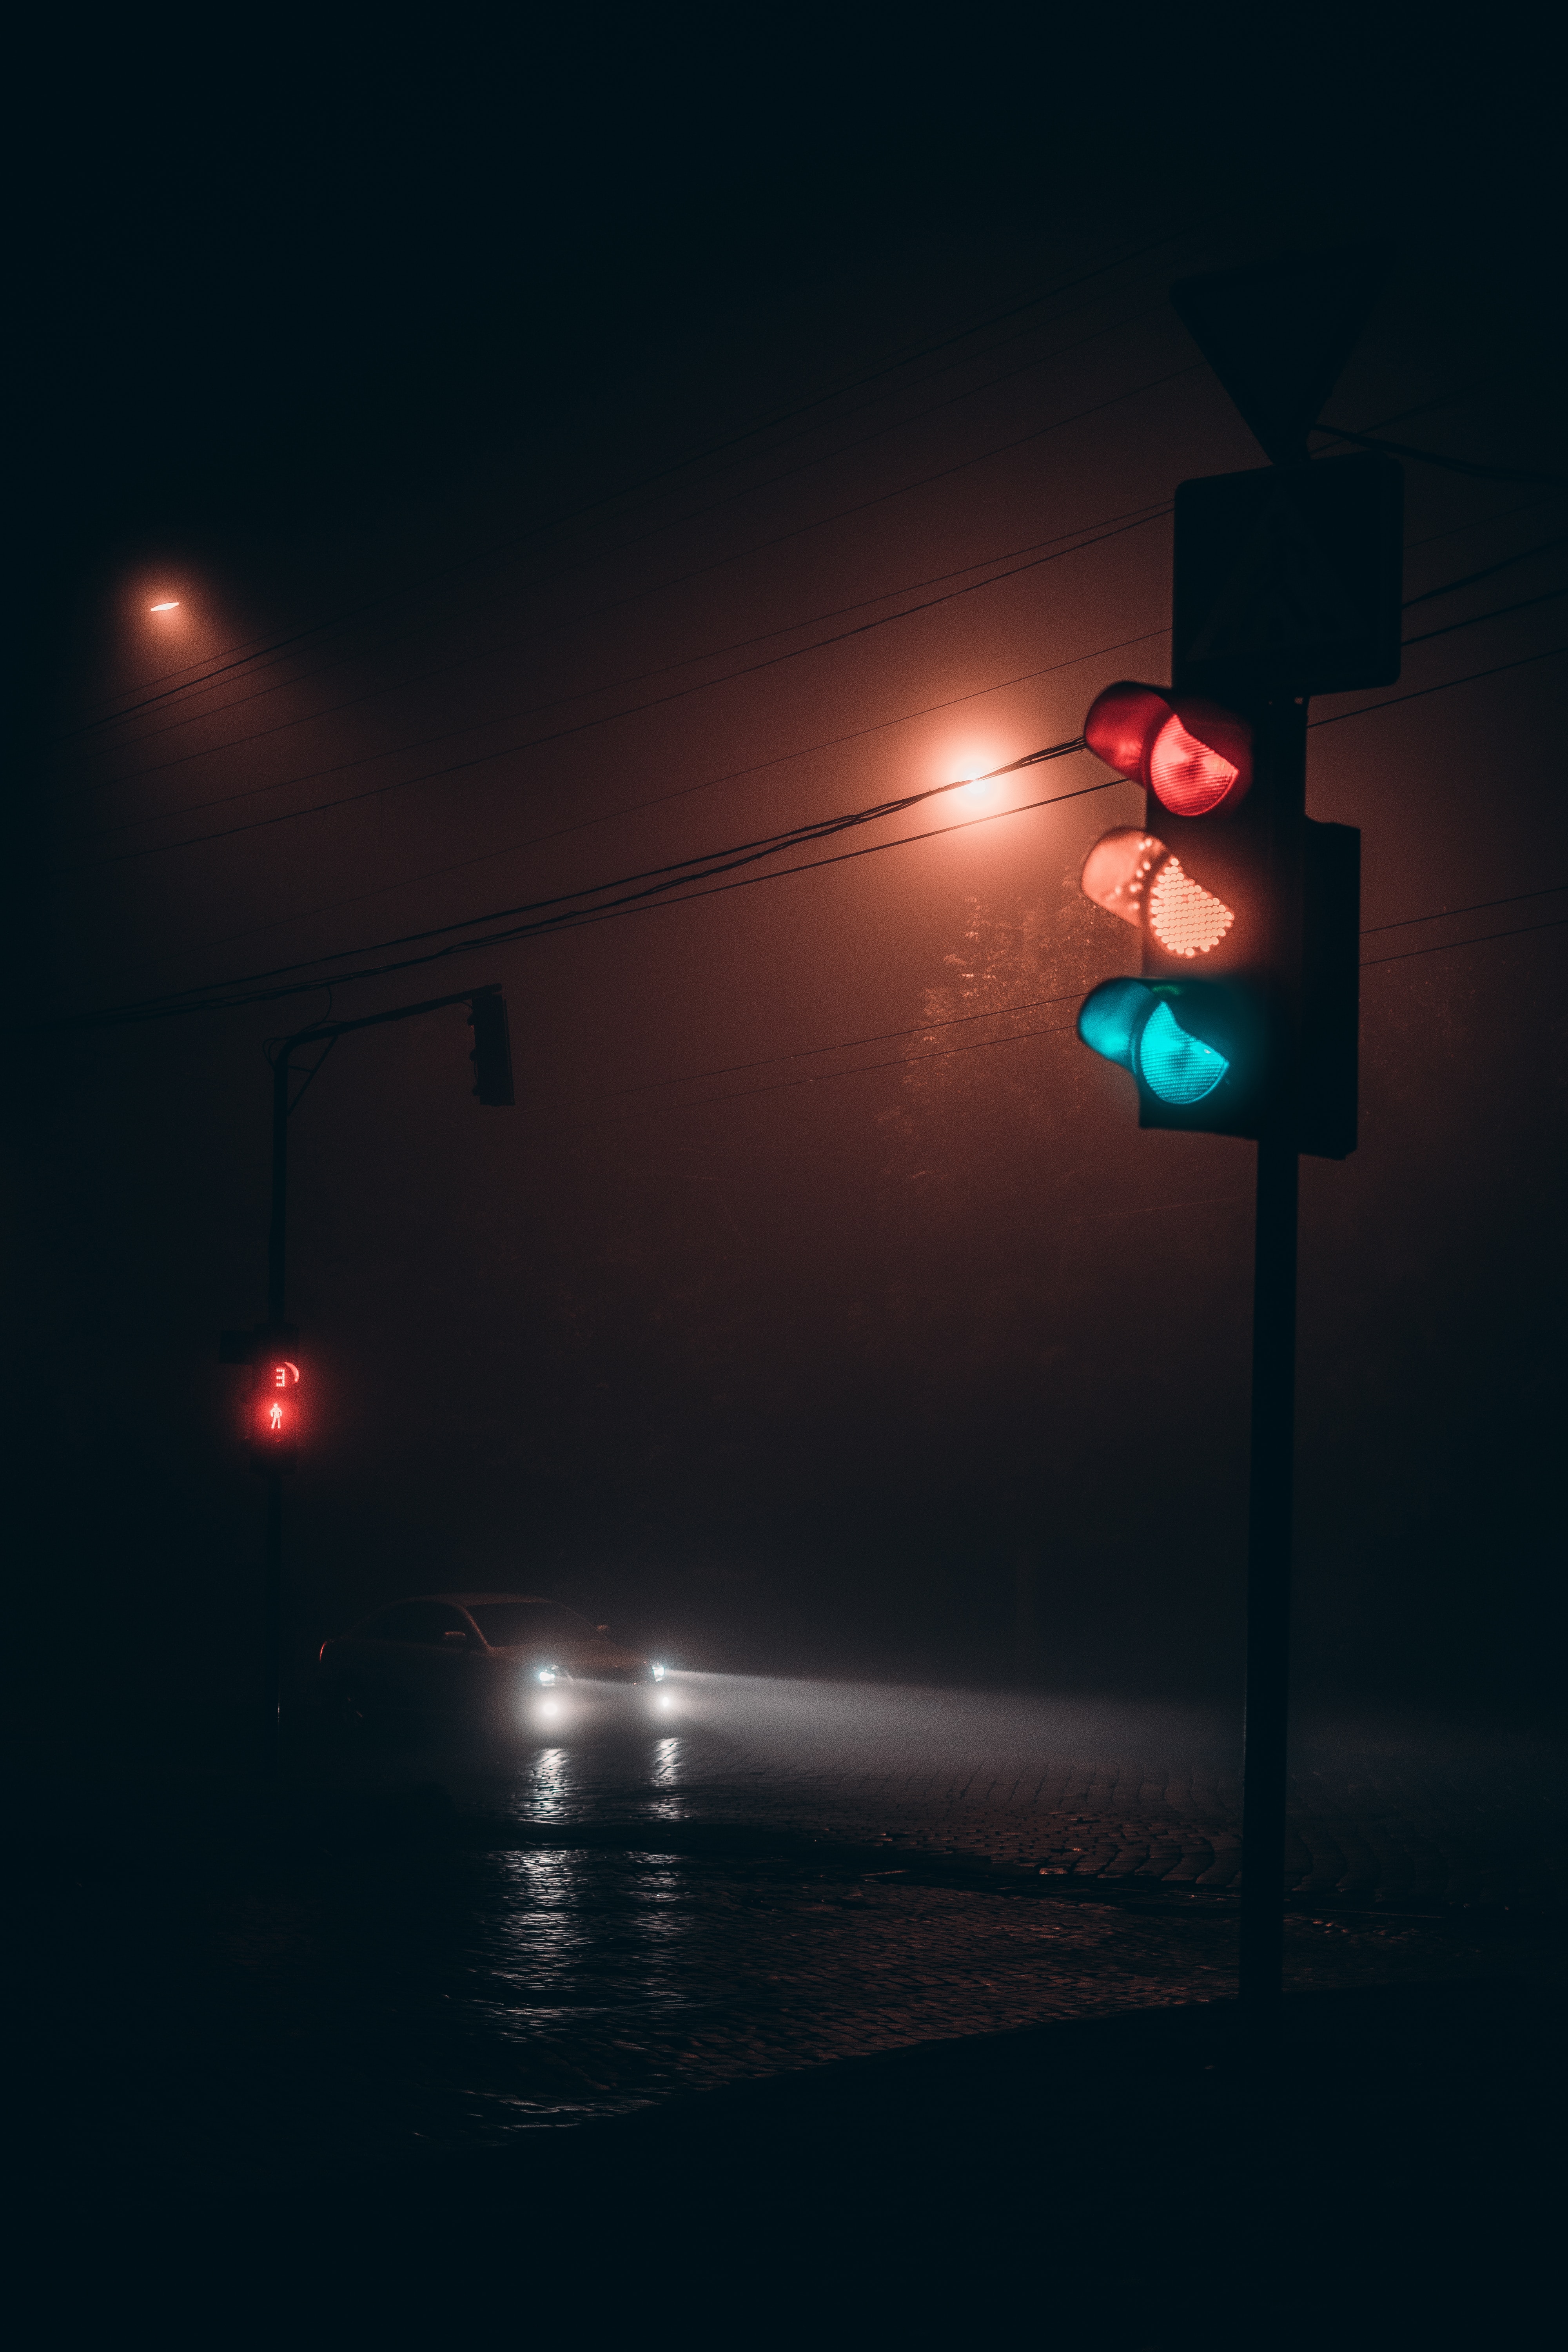 night, machine, cities, traffic light Fog HQ Background Images